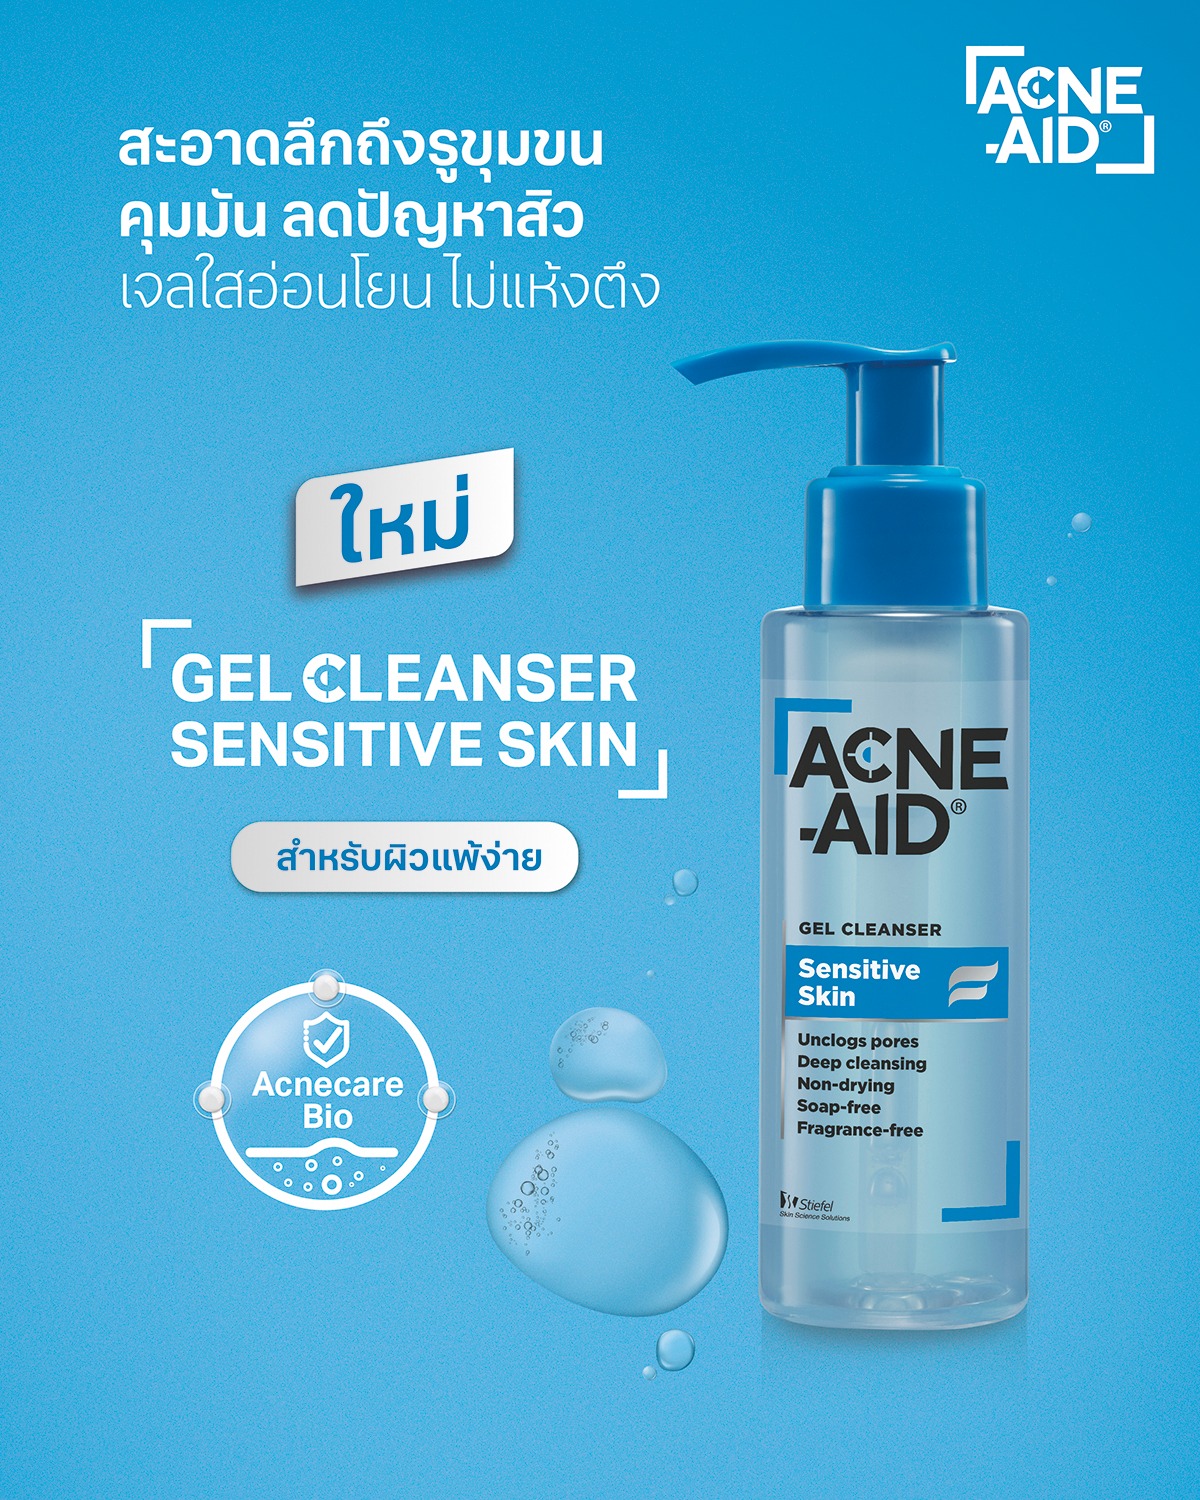 Acne-Aid Sens Gel Cleanser 100ml เจลทำความสะอาดผิวหน้าแบบใส ผสาน Salicylic Acid ลดการอุดตันใต้ผิว ​